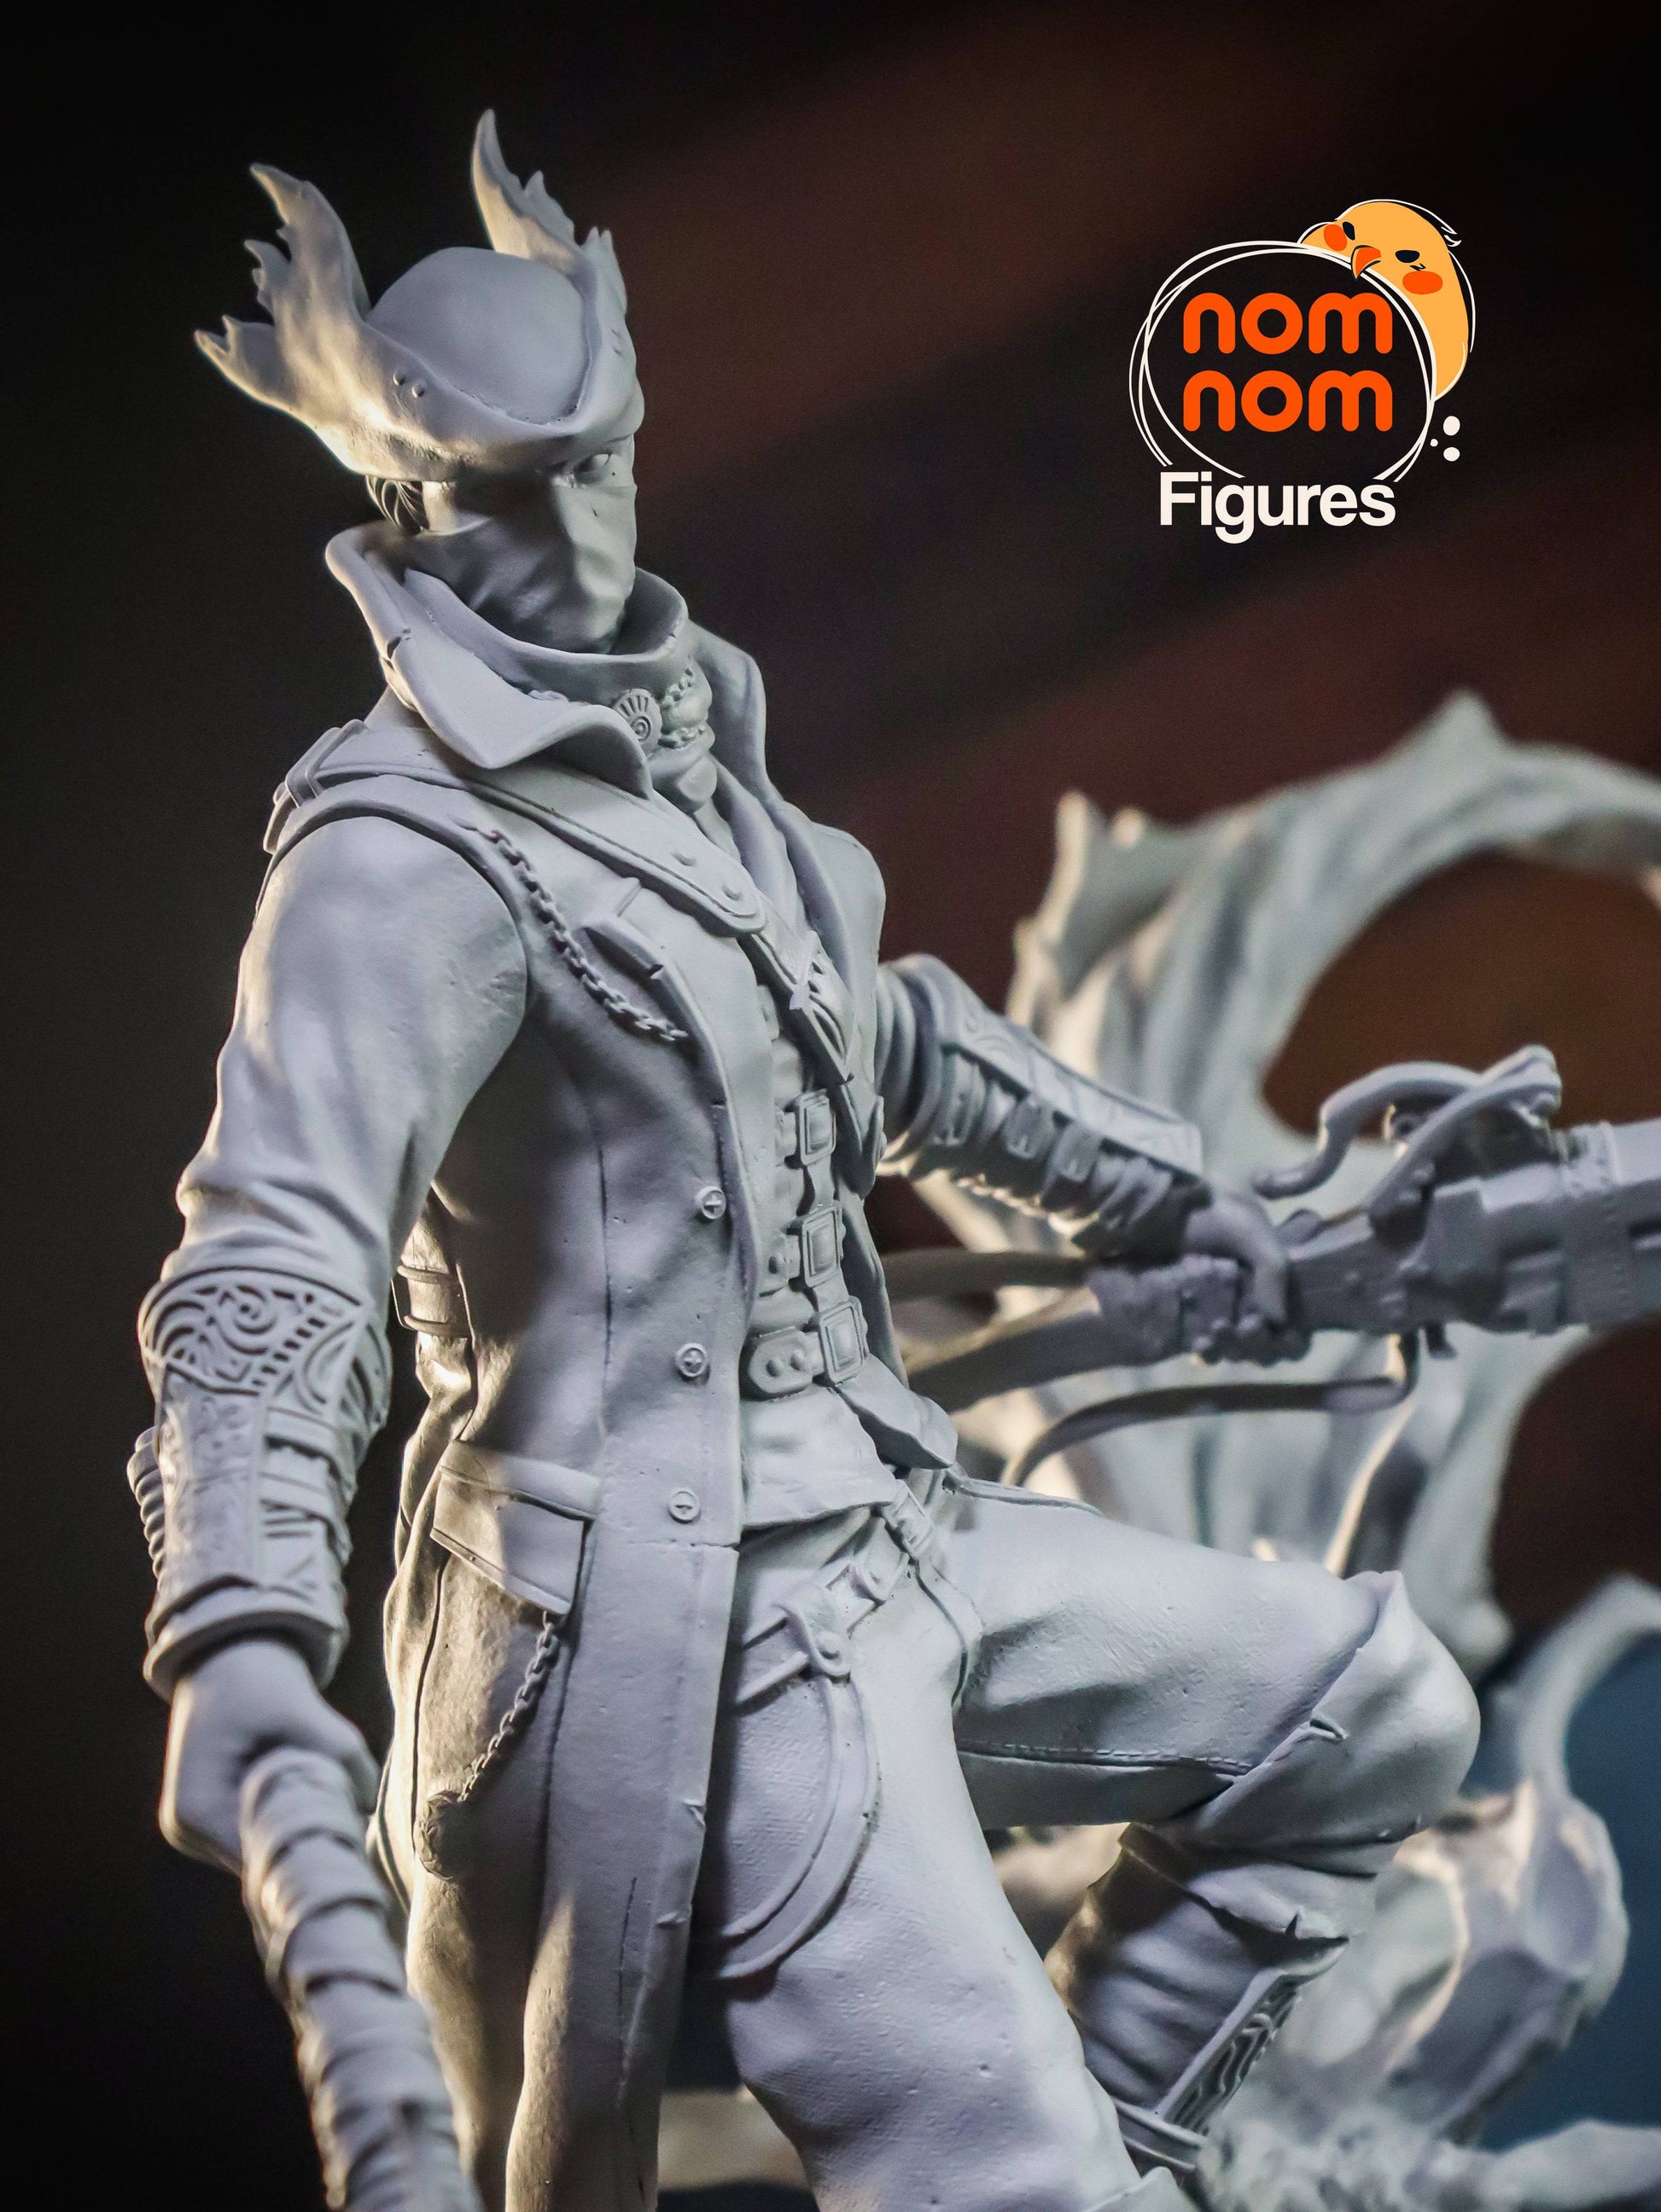 Bloody Hunter | Resin Garage Kit Sculpture Anime Video Game Fan Art Statue | Nomnom Figures - Tattles Told 3D